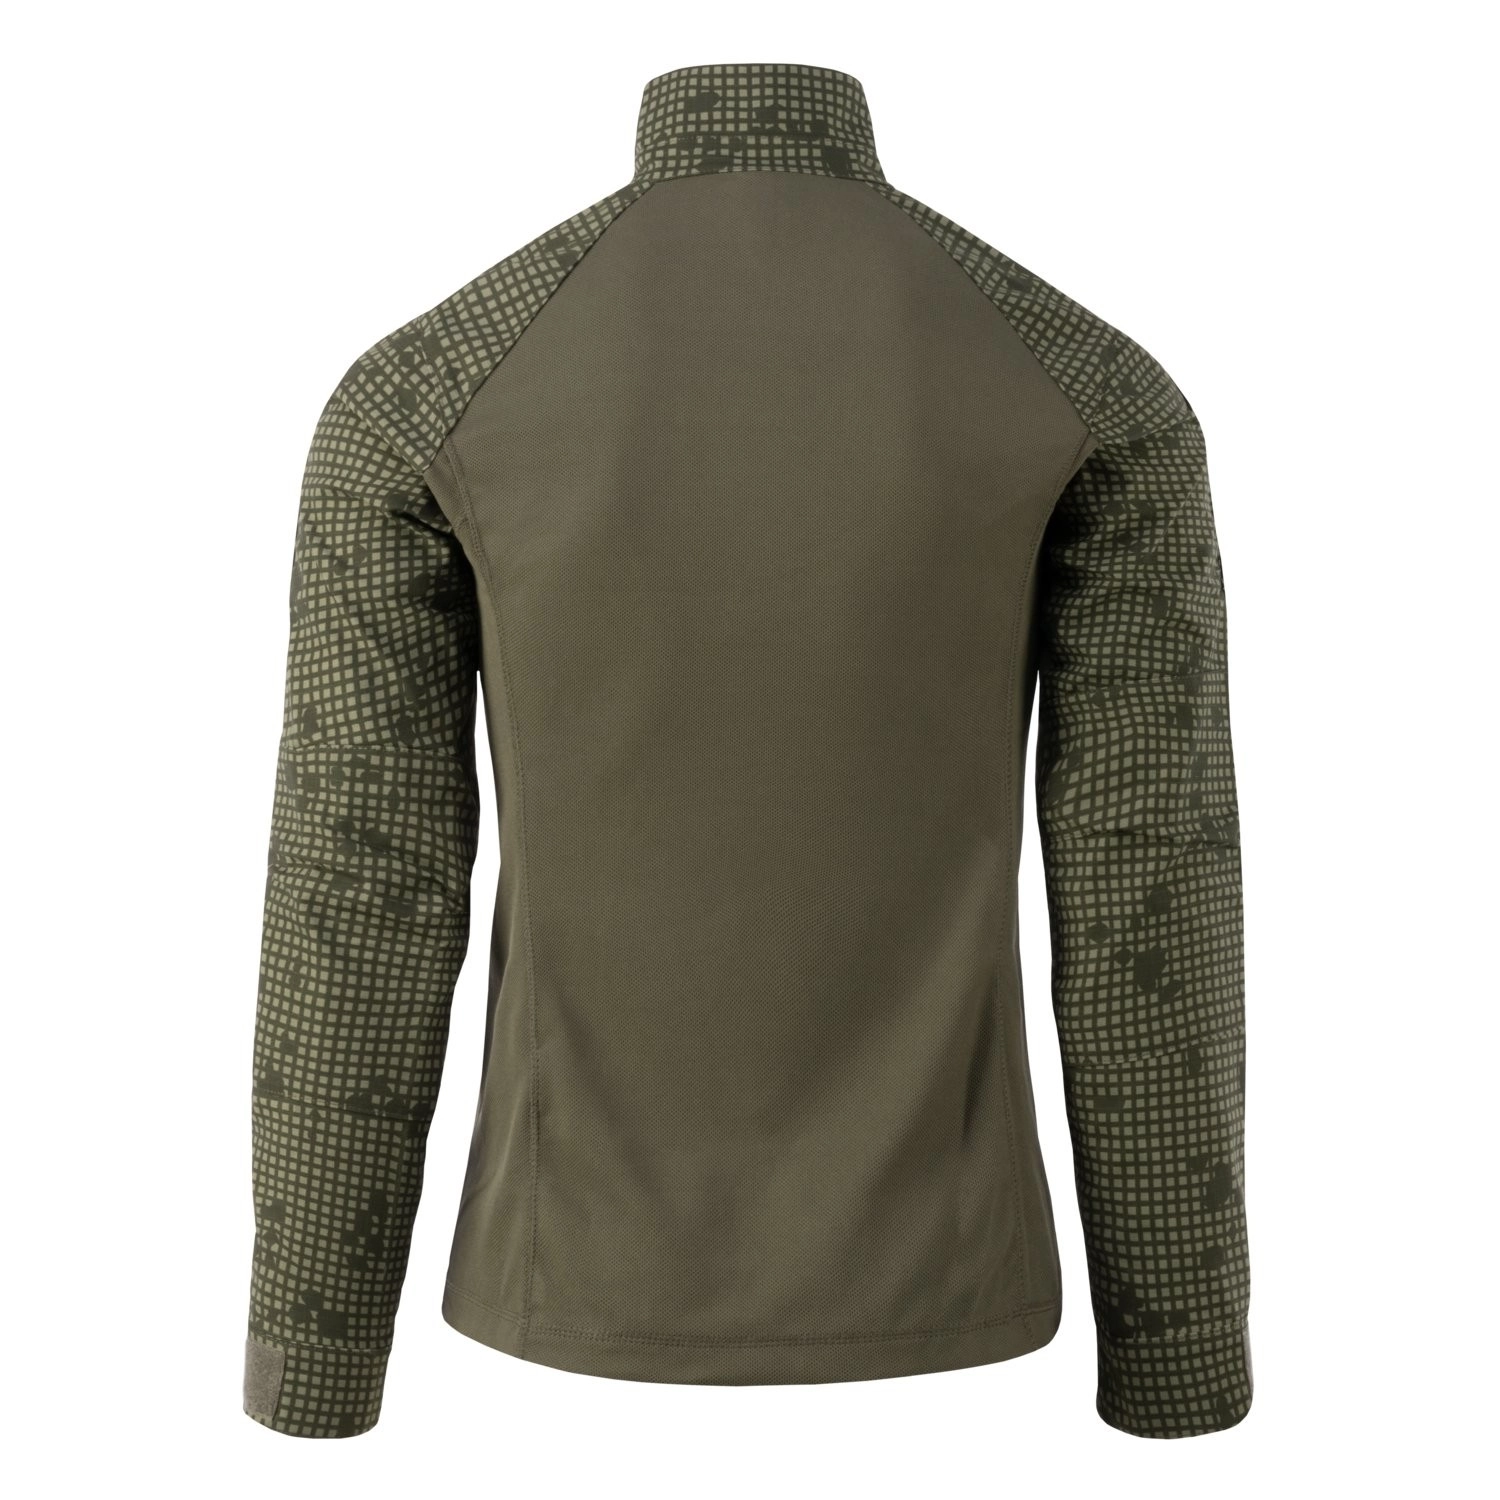 Helikon-Tex MCDU Combat Shirt - Tiger Stripe / Olive Green